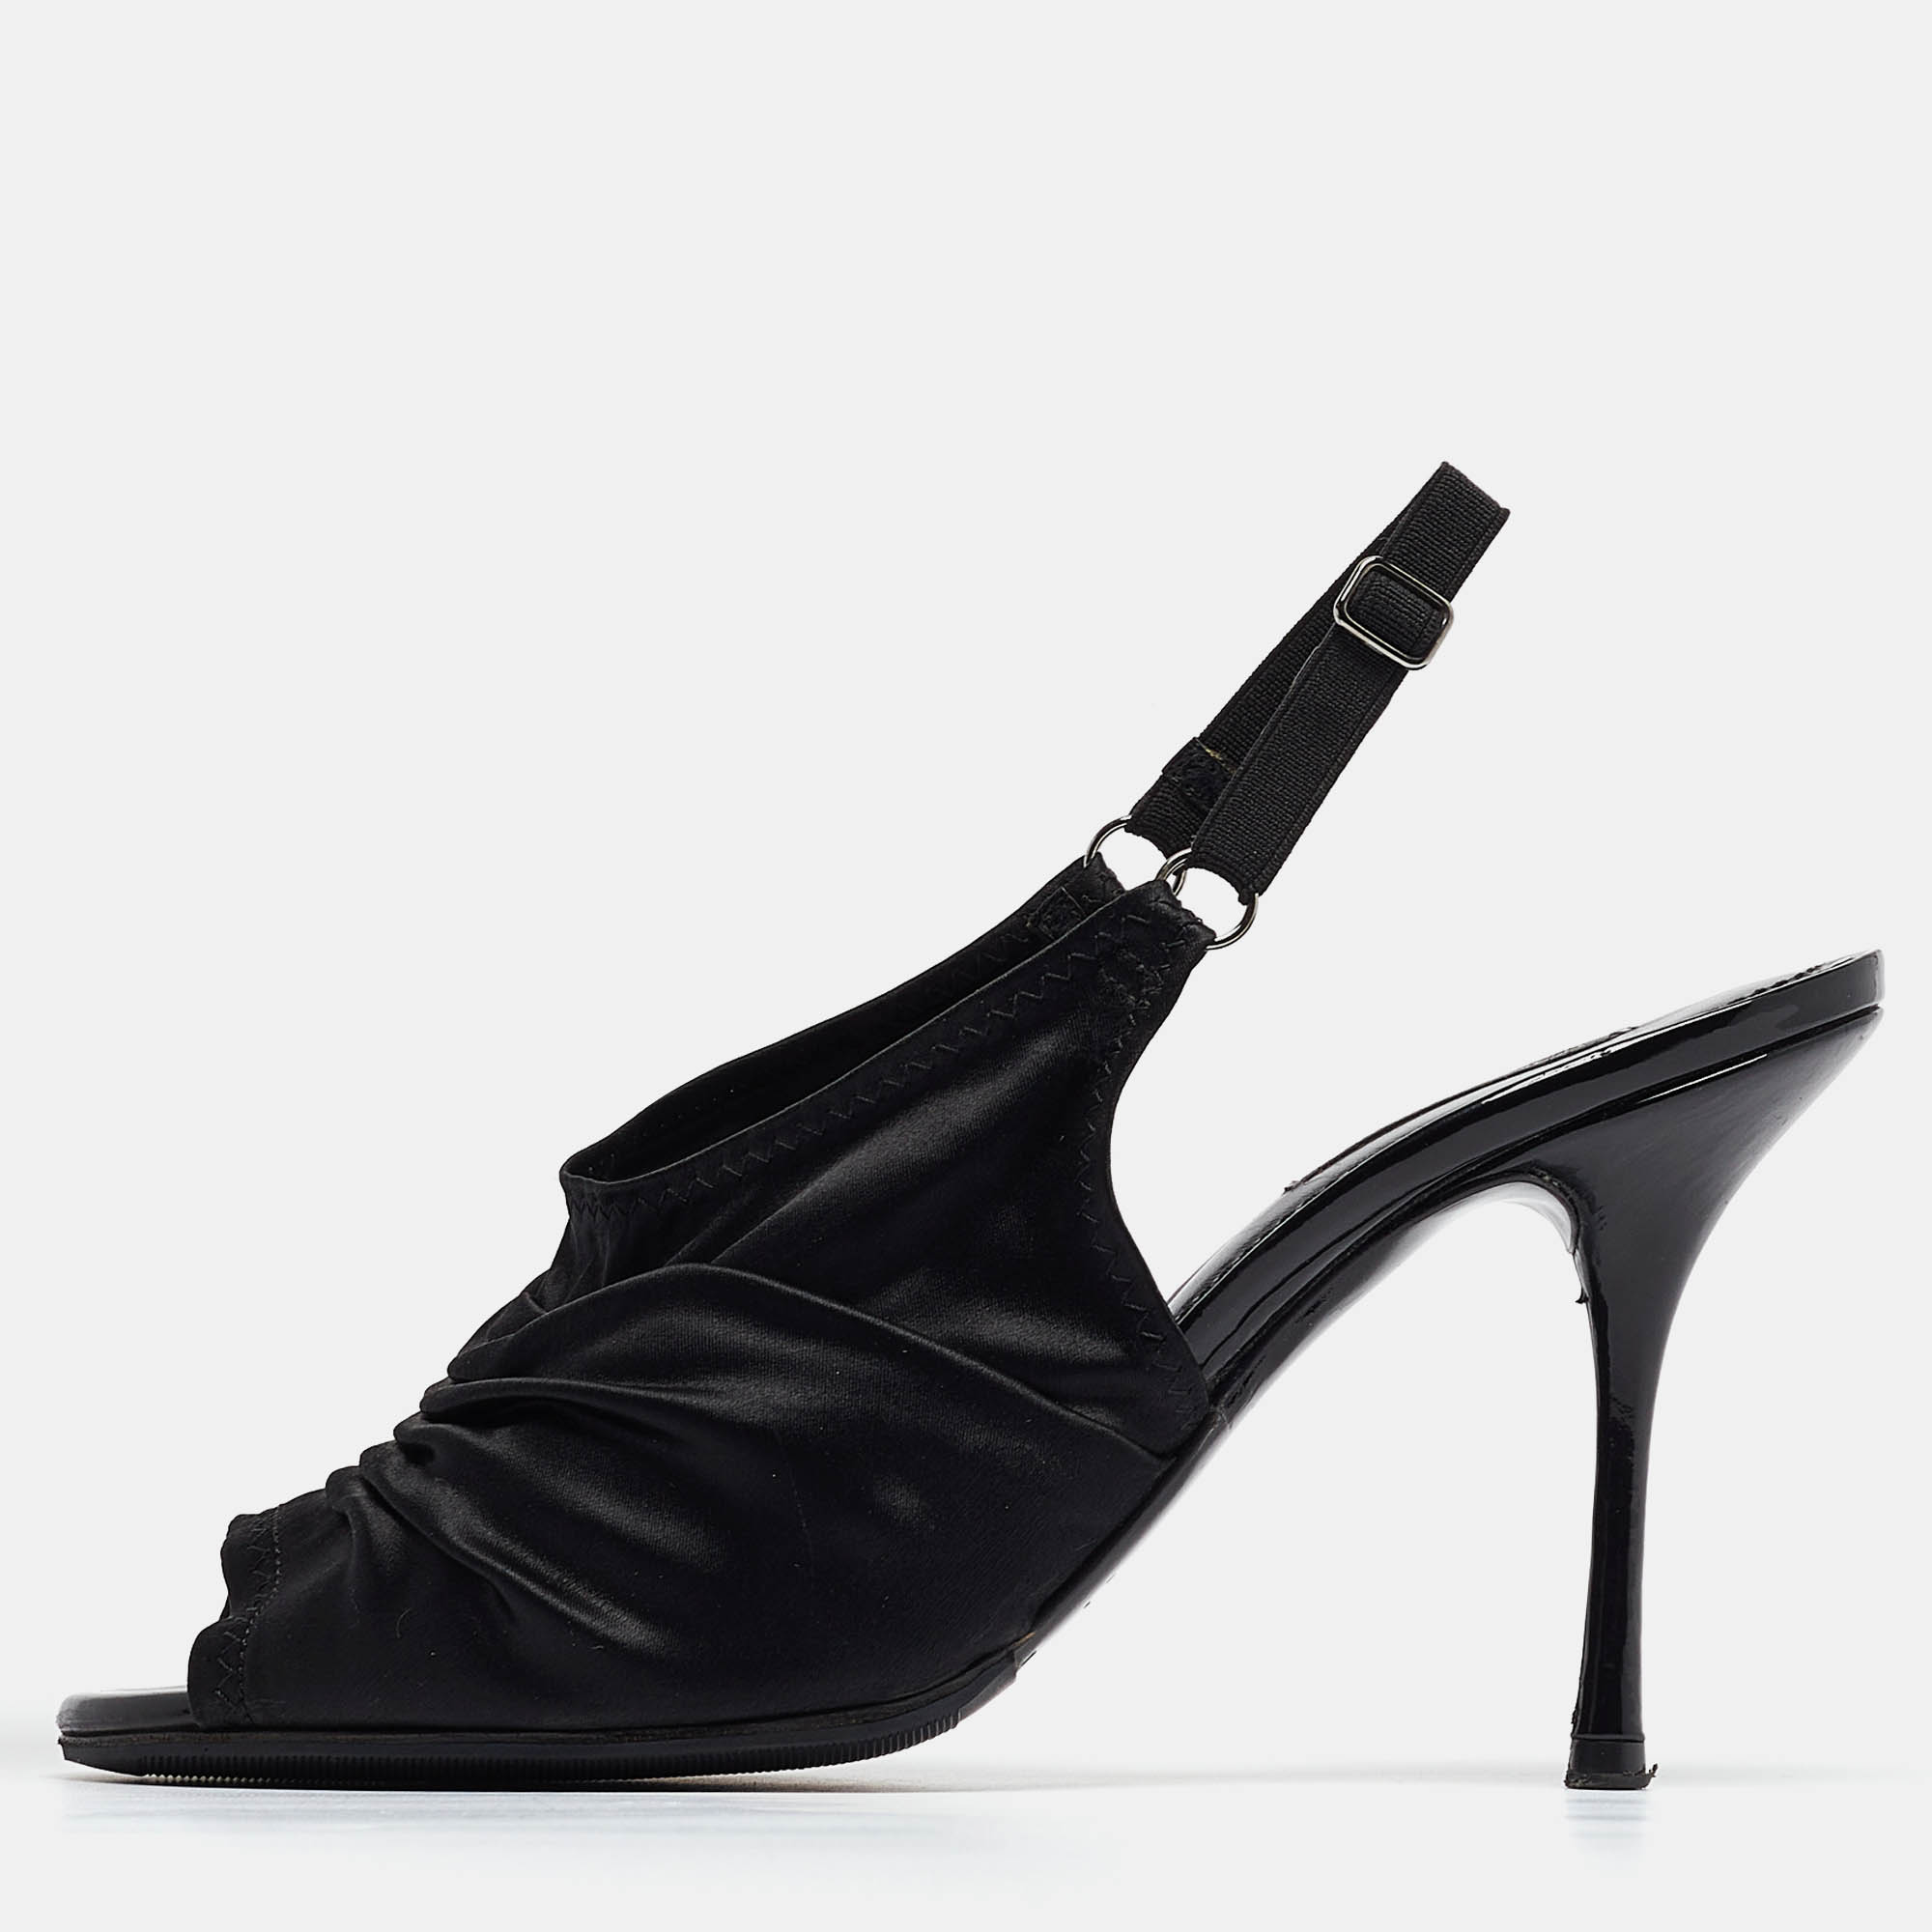 Dolce & gabbana black satin peep toe slingback sandals size 39